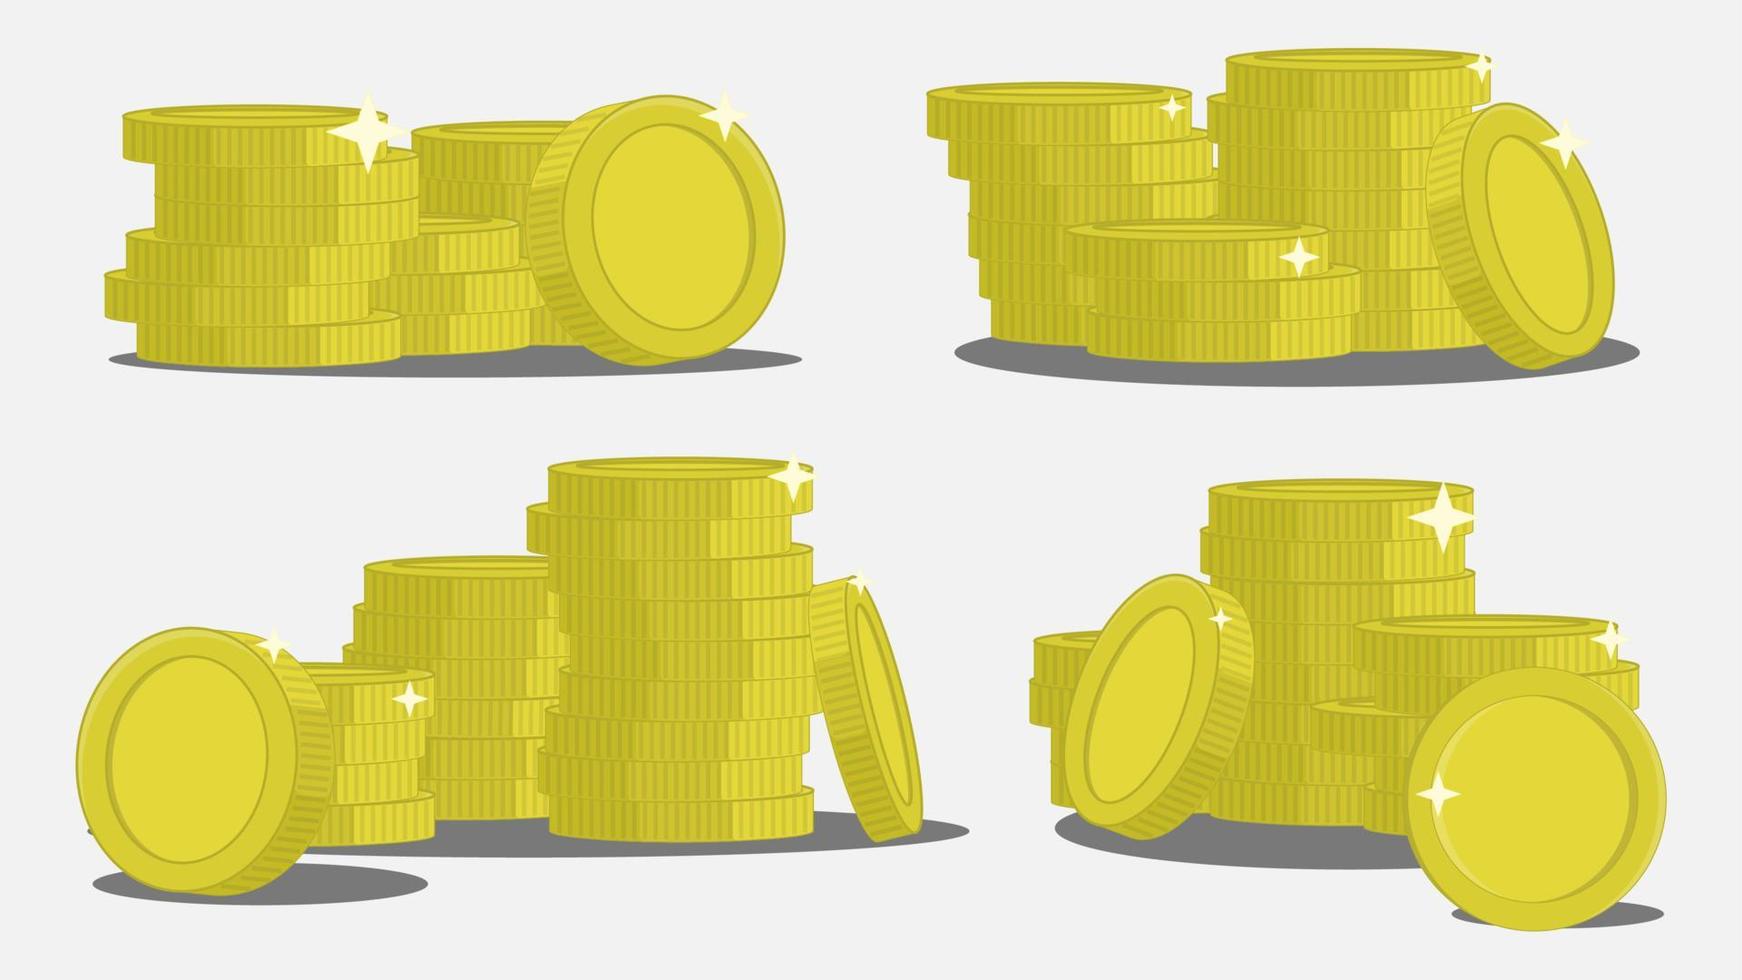 shinning set golden coins icon on grey background vector illustration EPS10